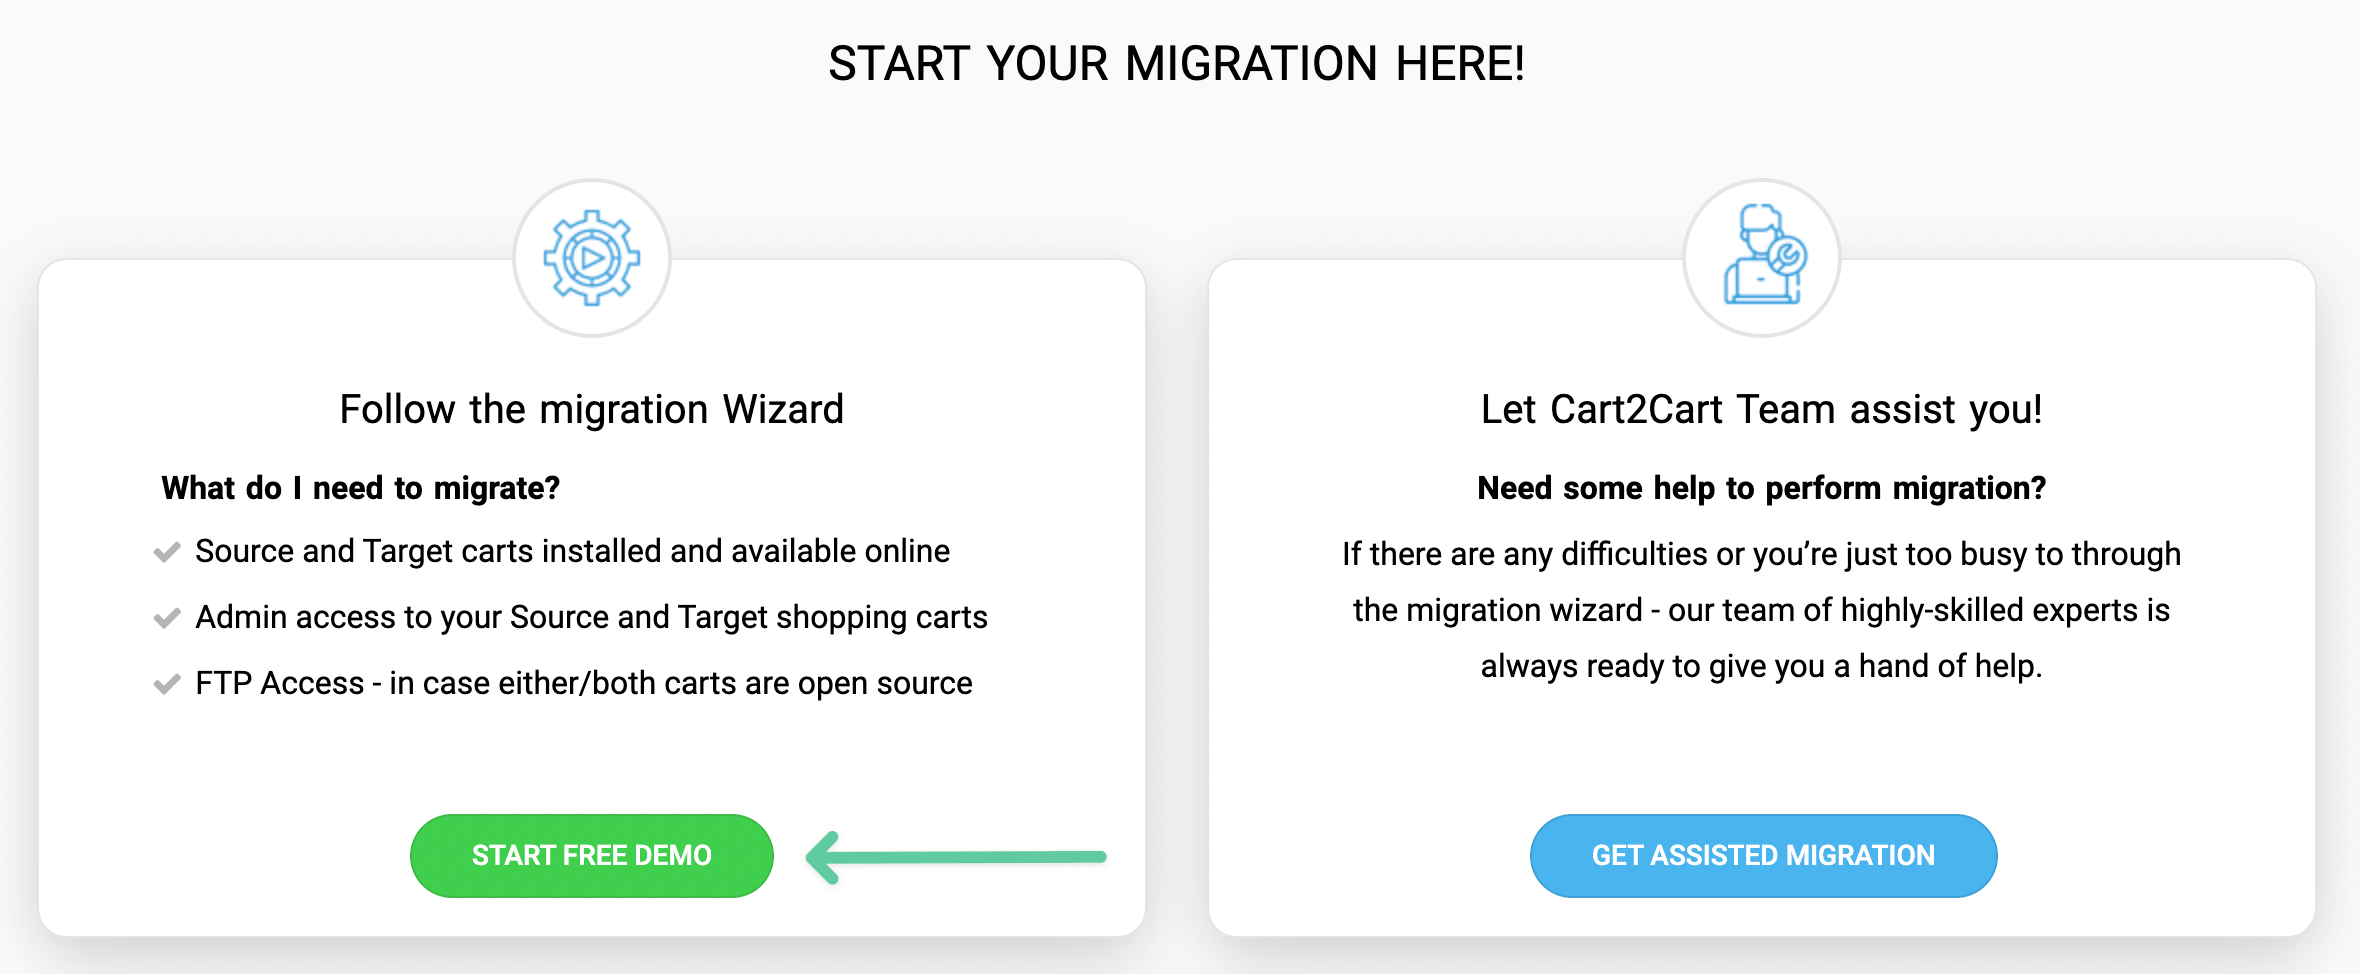 Choose free demo migration option